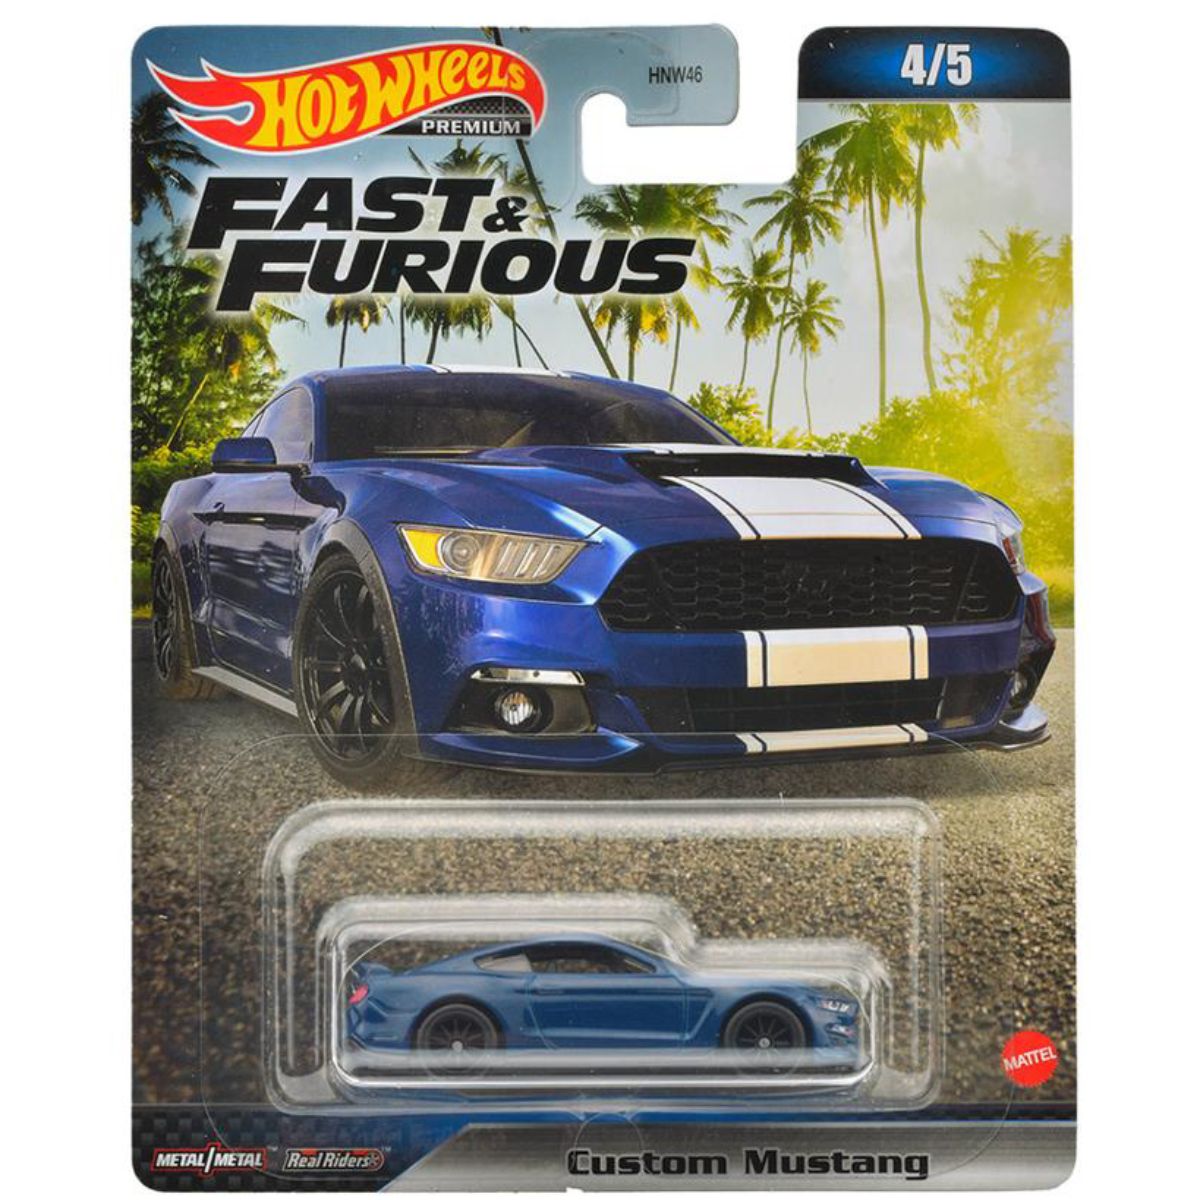 Masinuta din metal, Hot Wheels, Fast and Furious, Custom Mustang, 1:64, HNW51